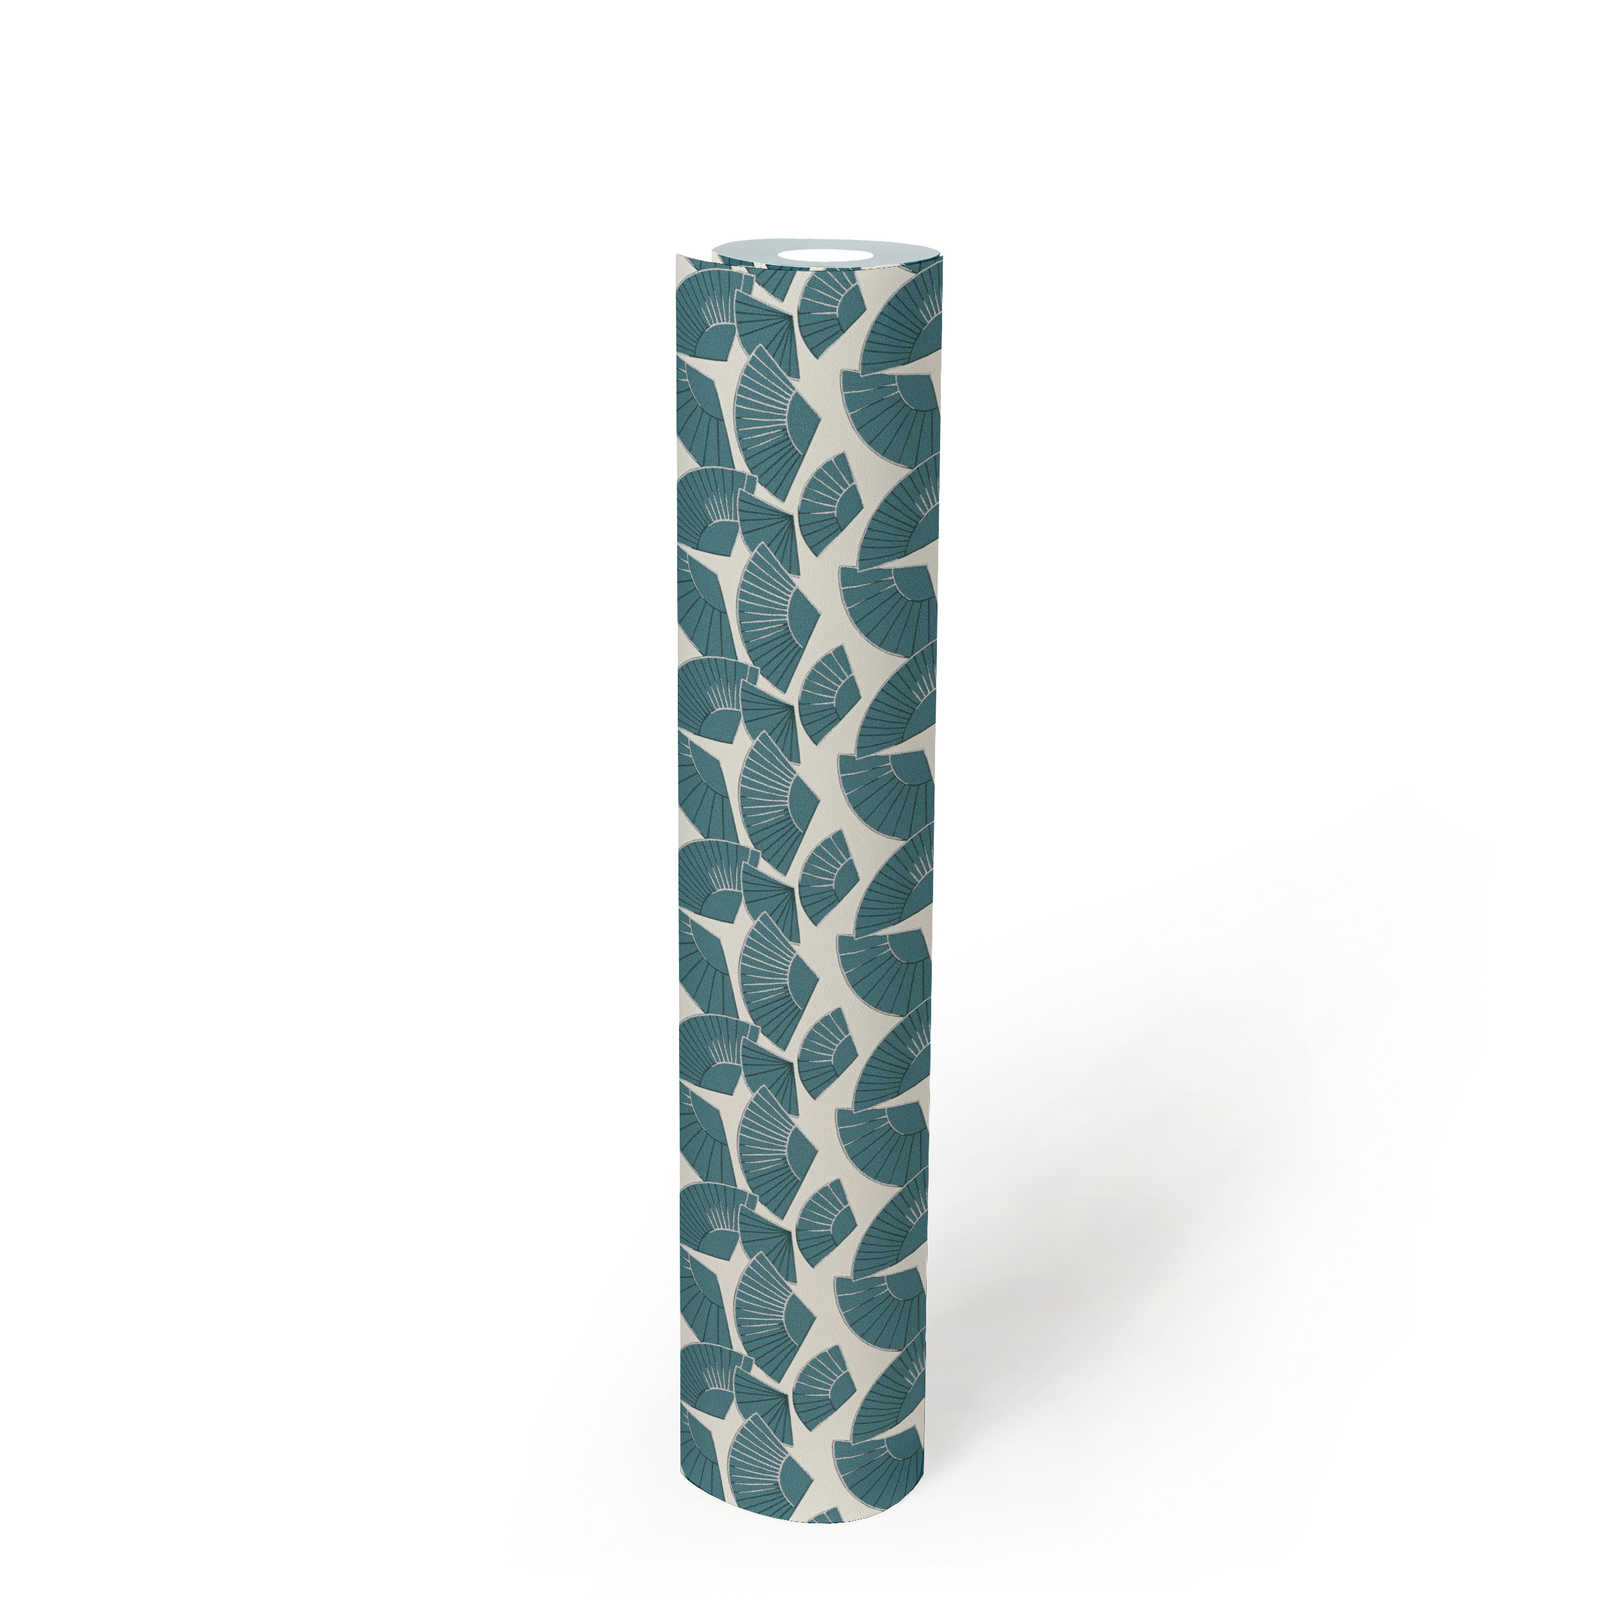             Karl LAGERFELD behang waaier design - groen, metallic
        